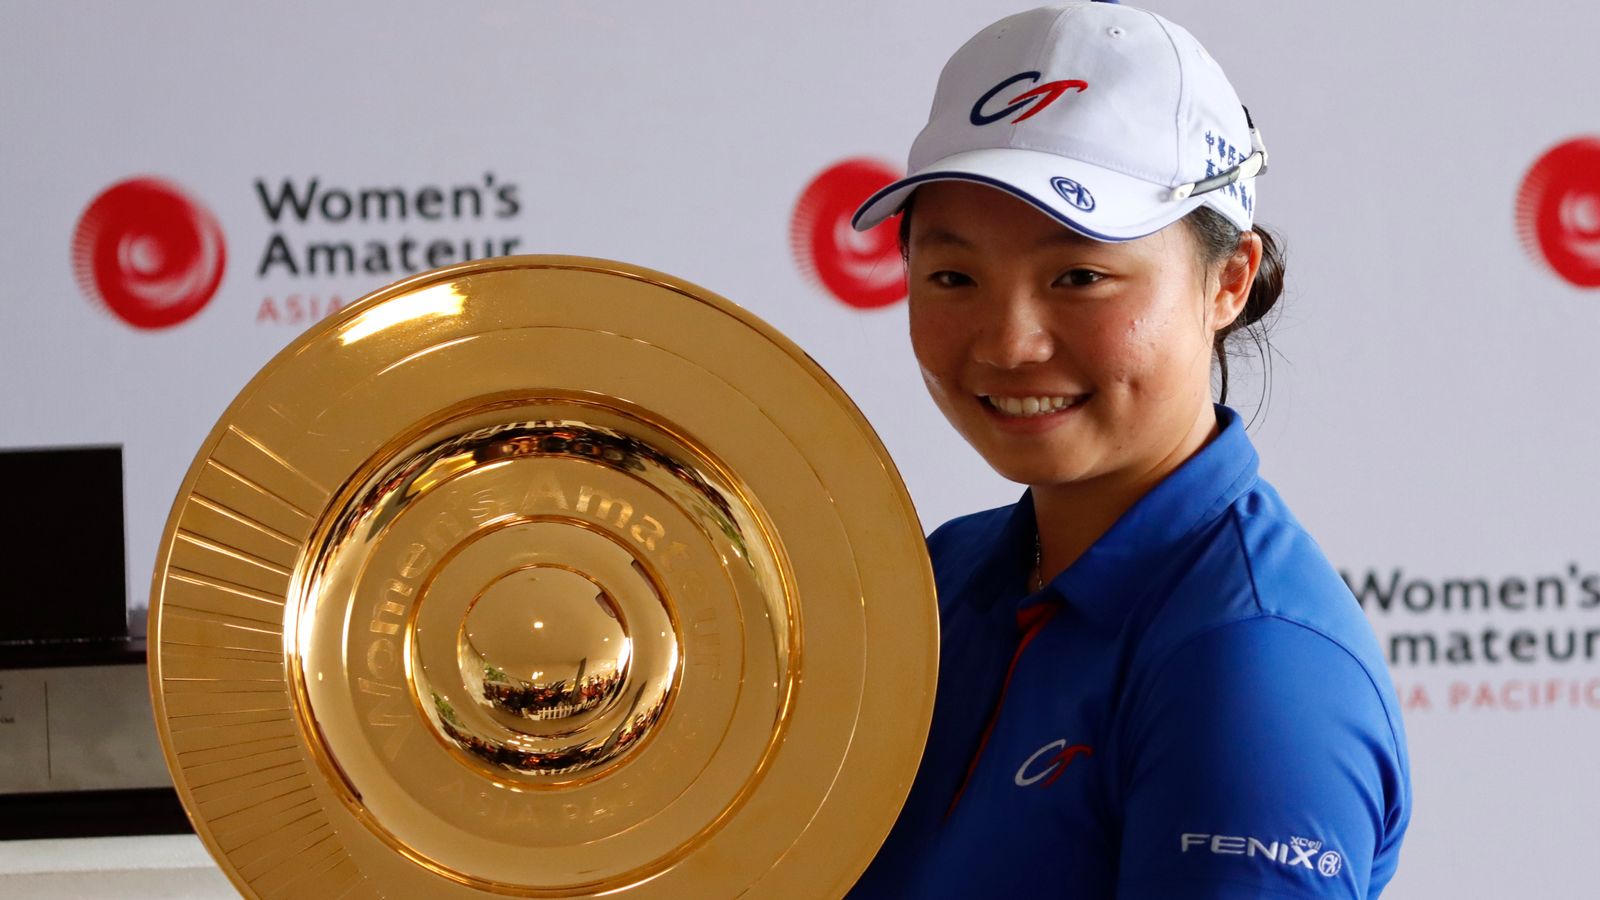 TingHsuan Huang qualifies for majors after winning Women's Amateur